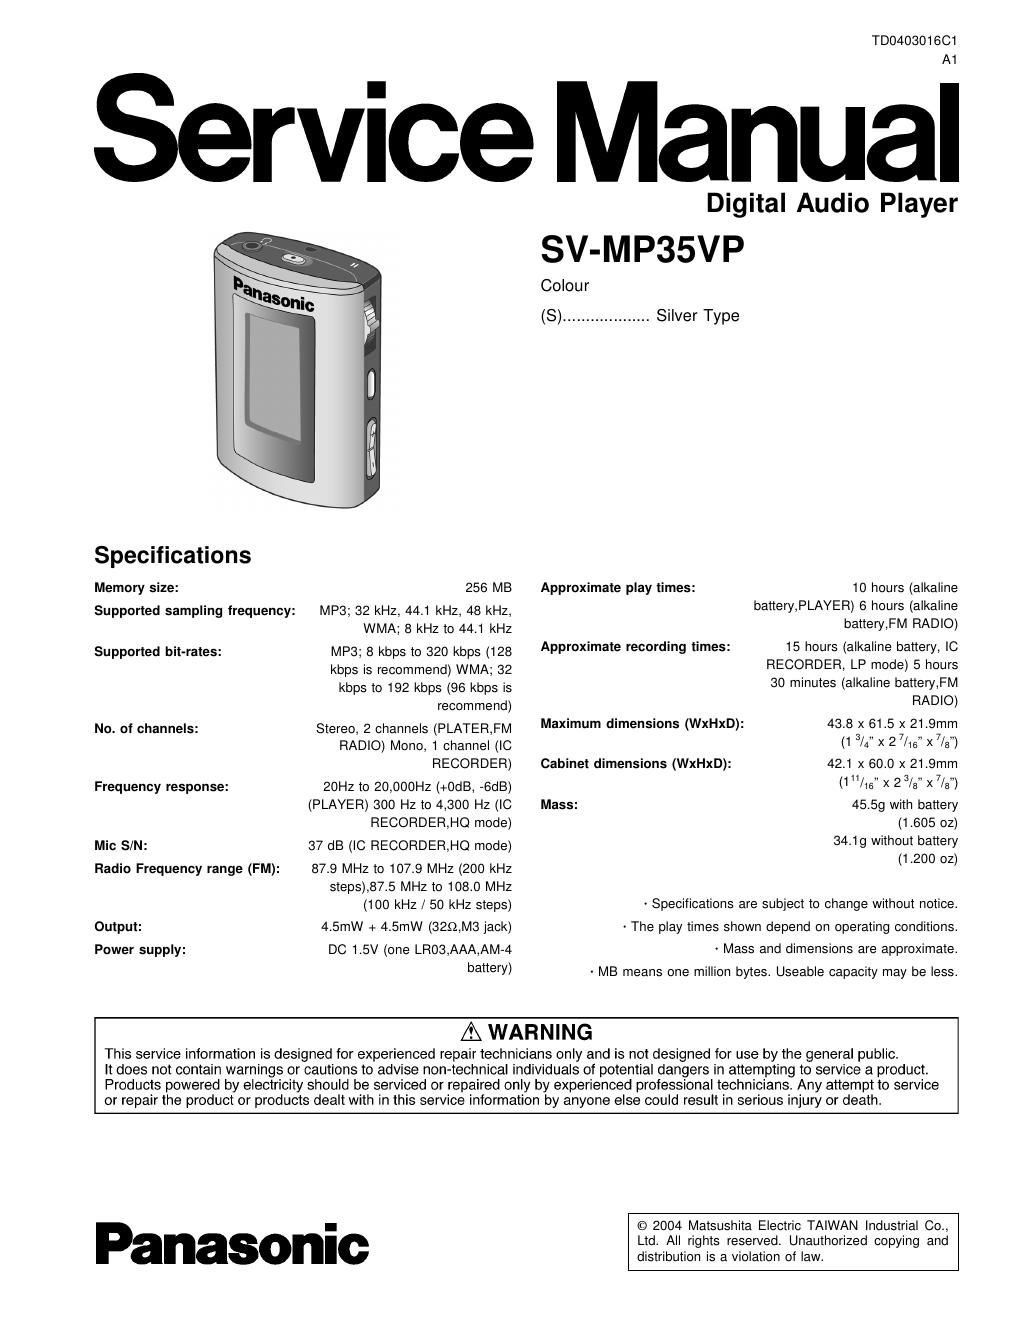 panasonic sv mp 35 mp service manual